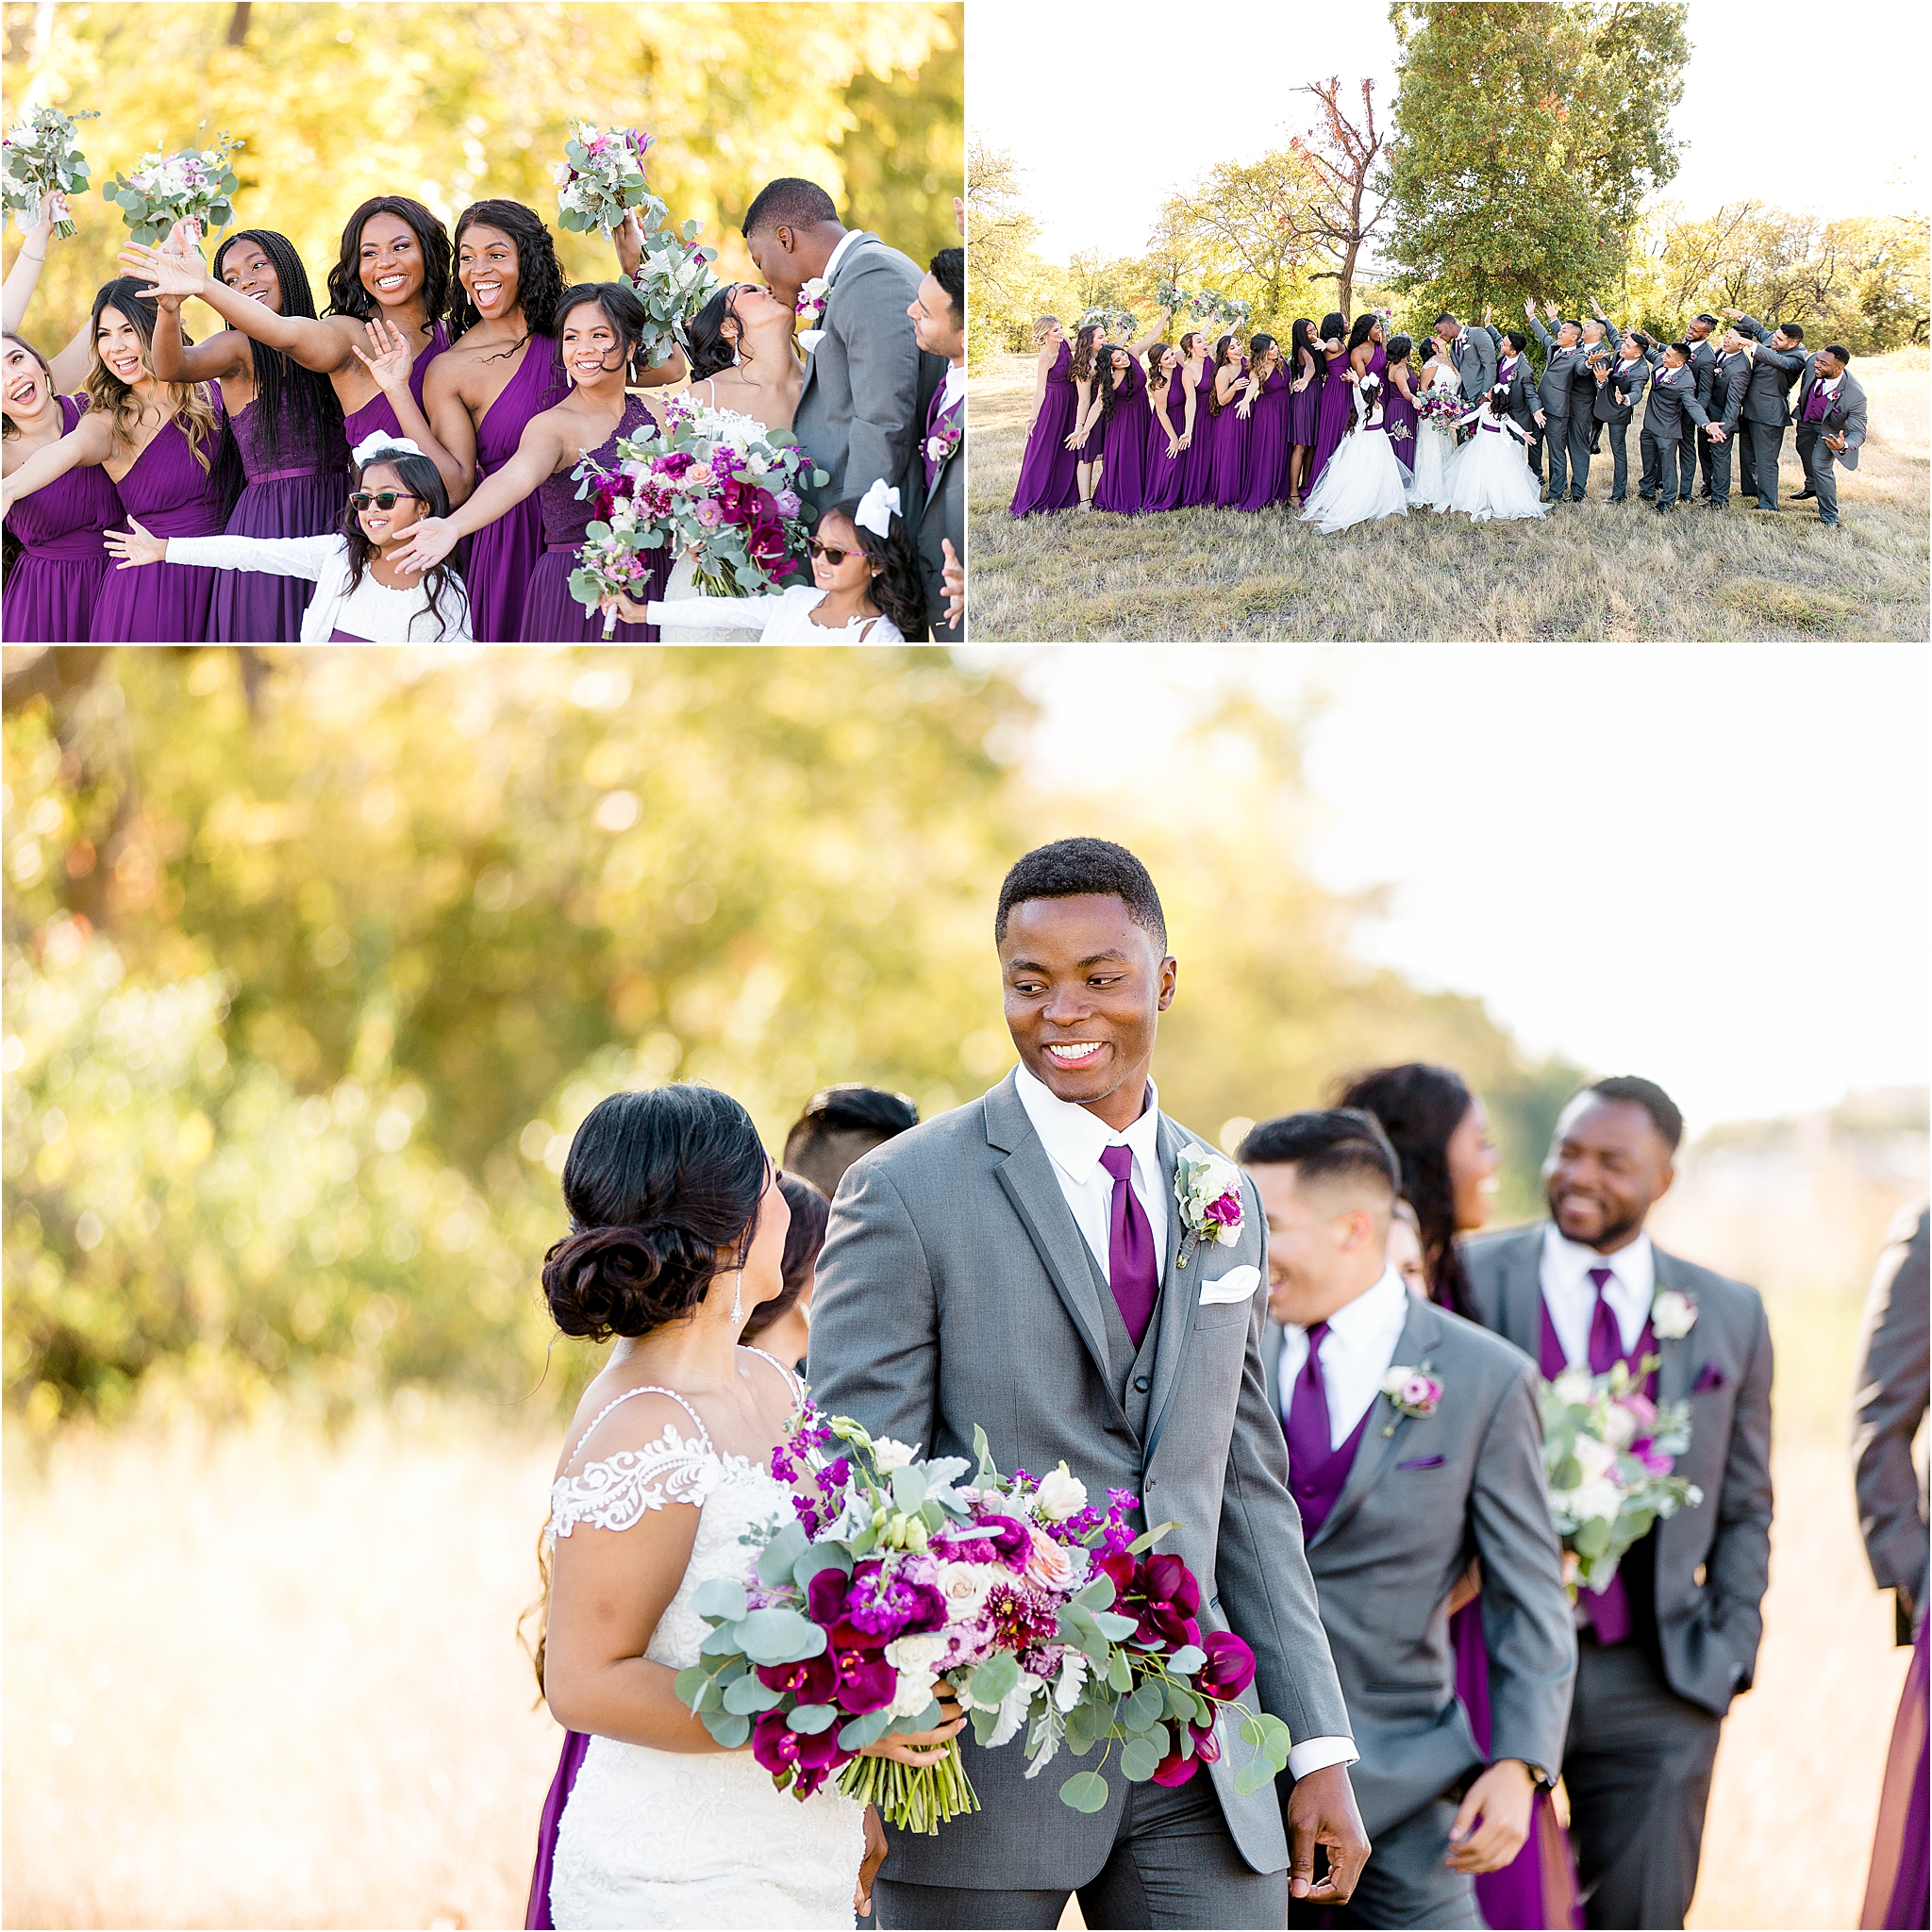 Colorful Fall Bridal Party Portraits in McKinney, Texas by Photographer Jillian Hogan